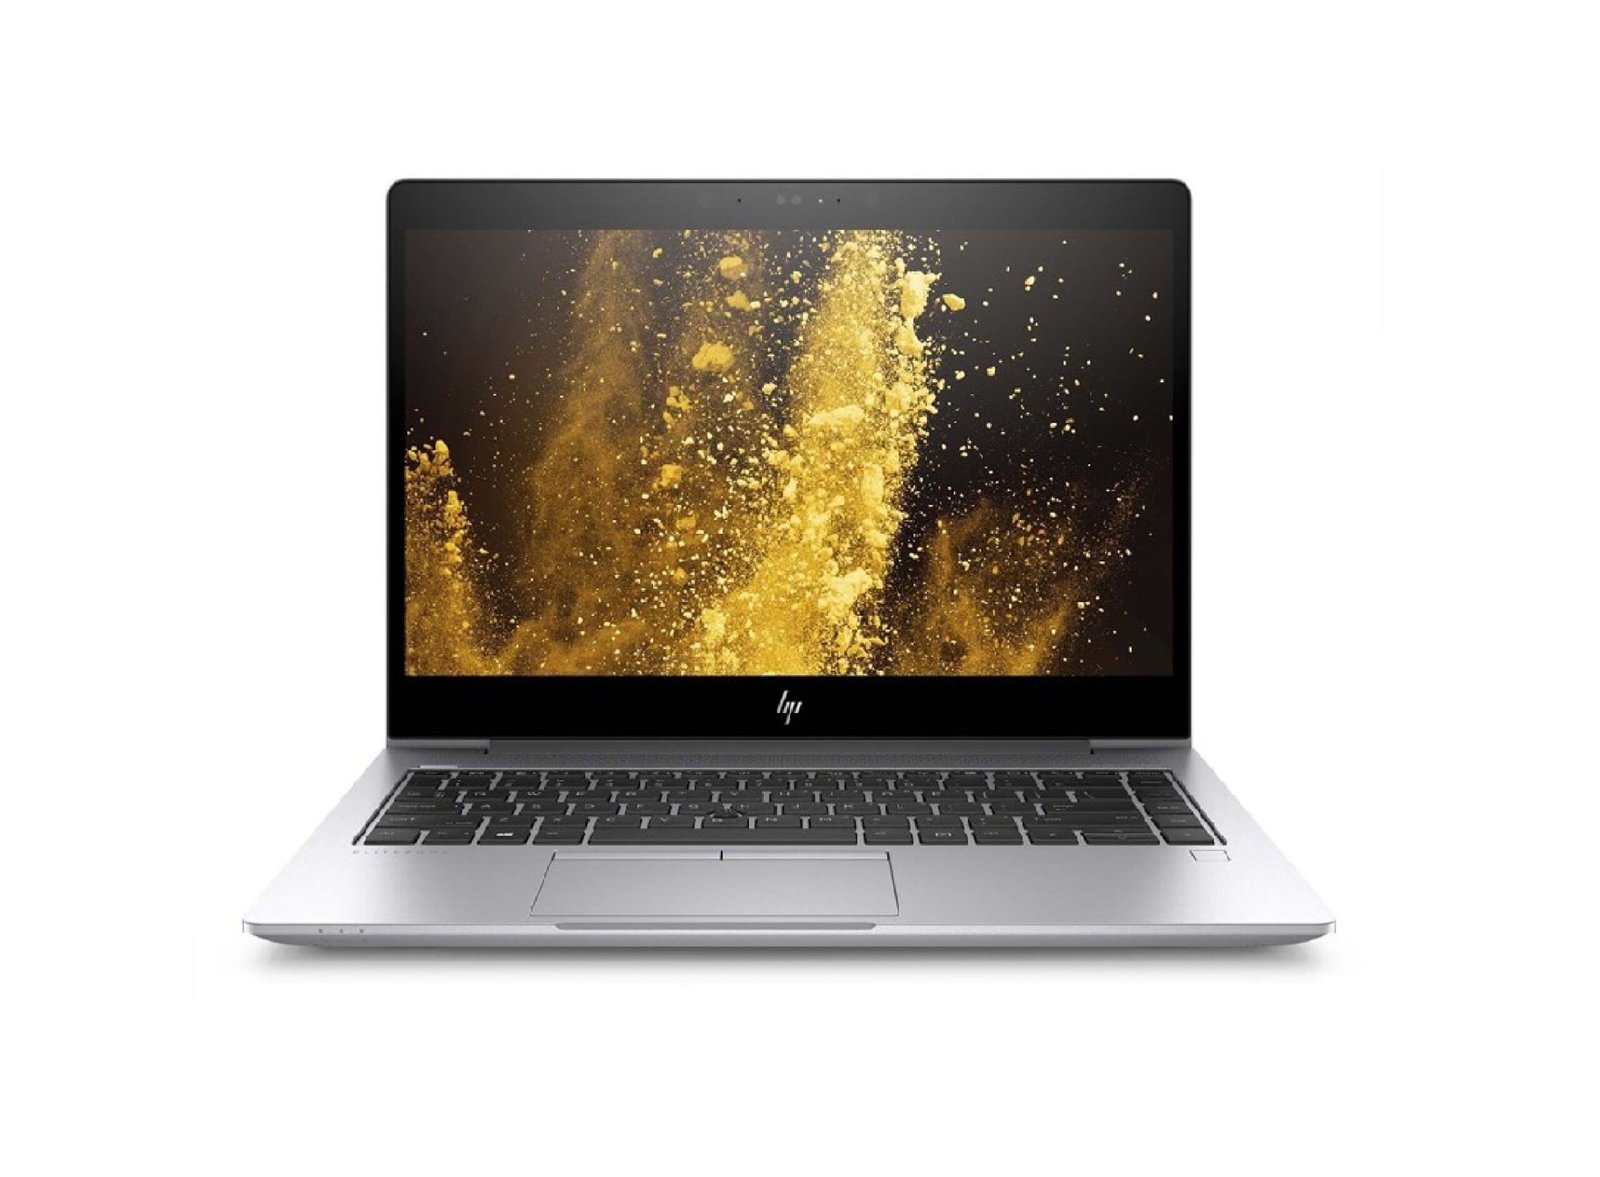 Hp Elitebook 840 G5 Laptop, Core I7-8550u 1.8ghz, 16gb, 1tb Ssd